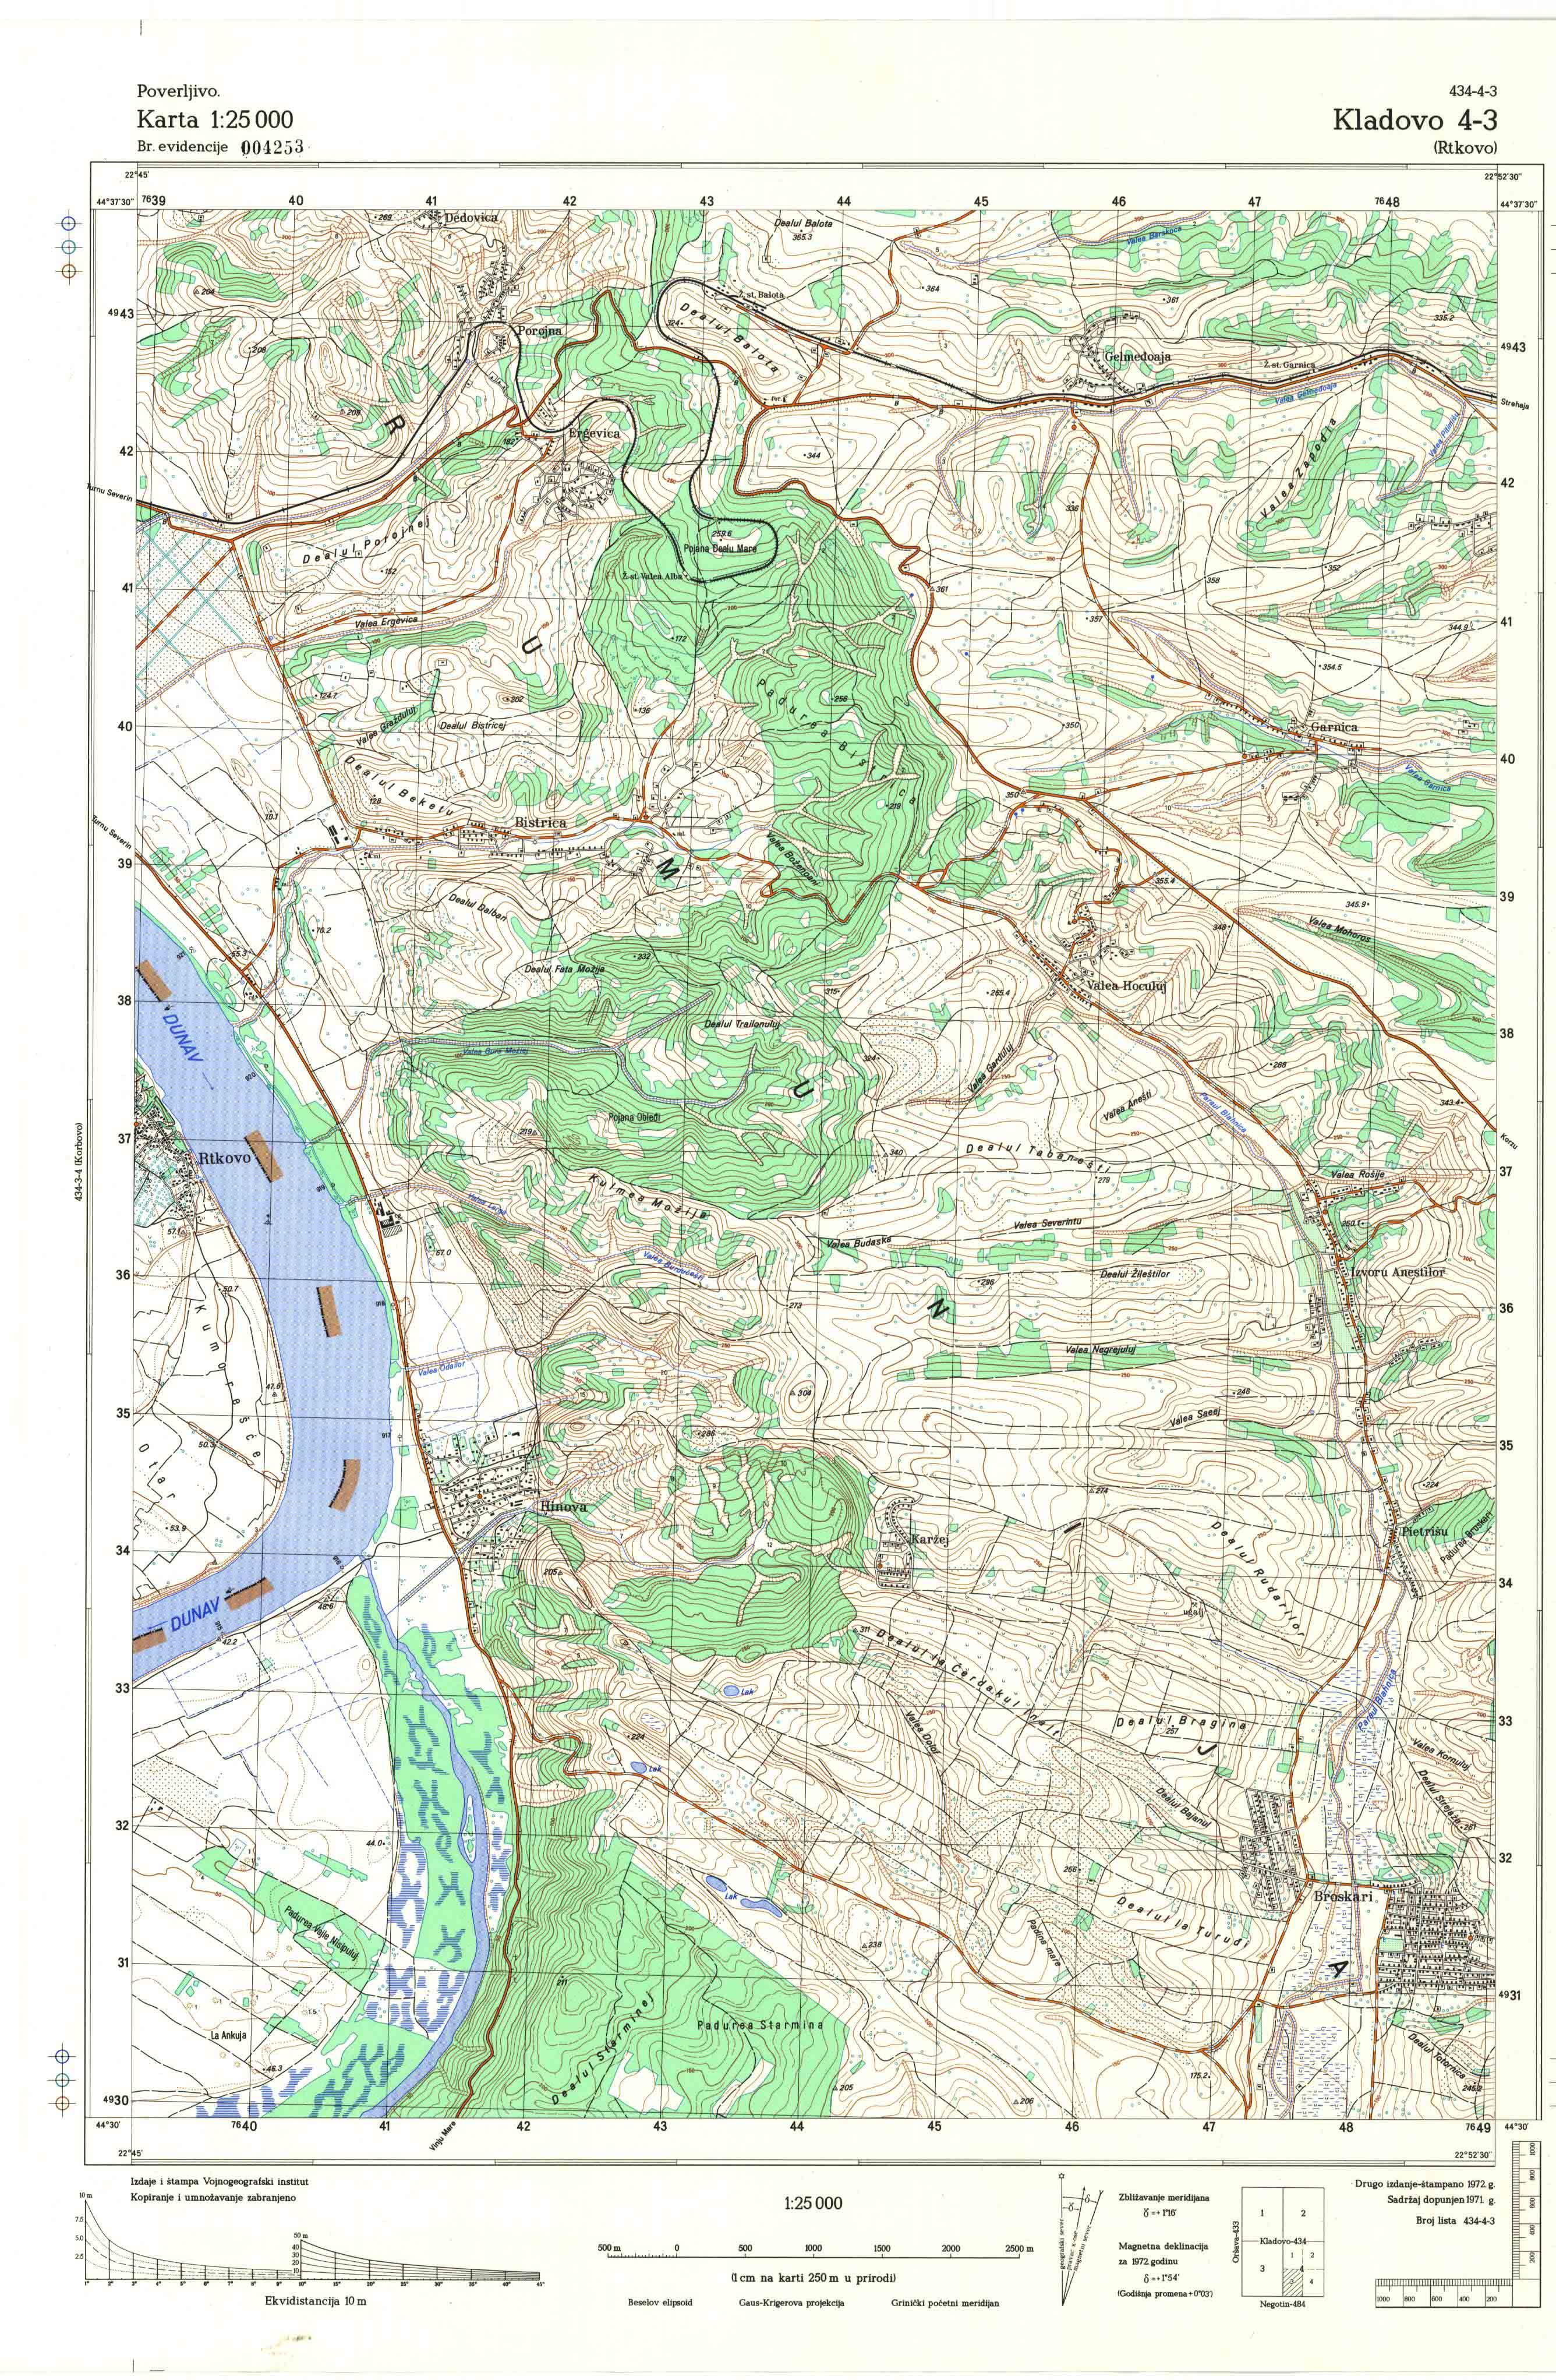  topografska karta srbije 25000 JNA  Kladovo